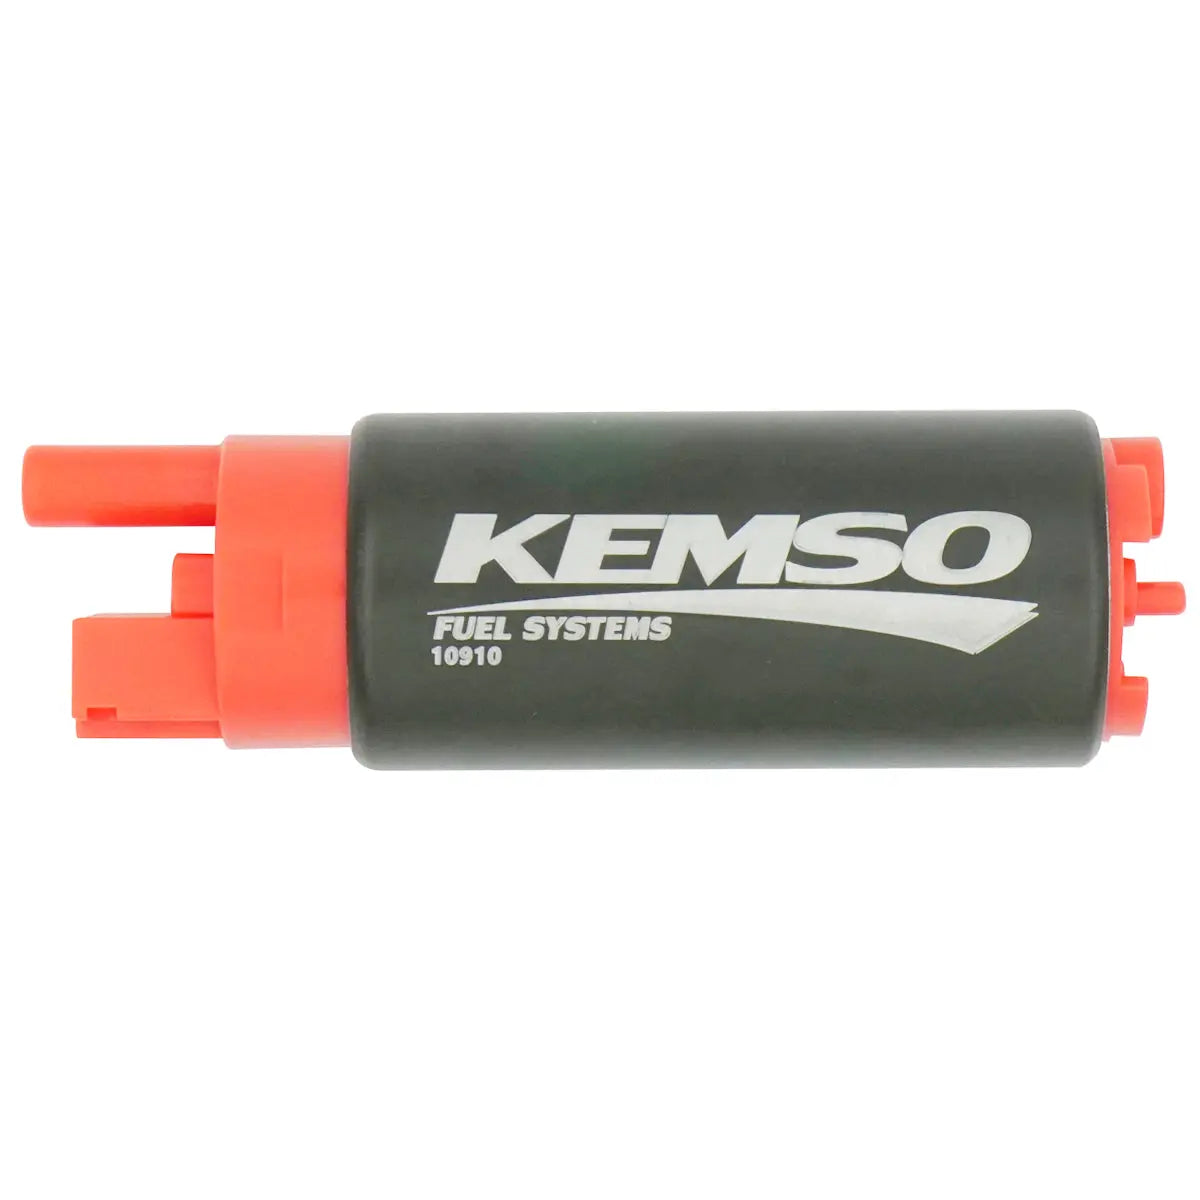 KEMSO 340LPH High Performance Fuel Pump for Mazda B4000 1998-2000 - KEMSO